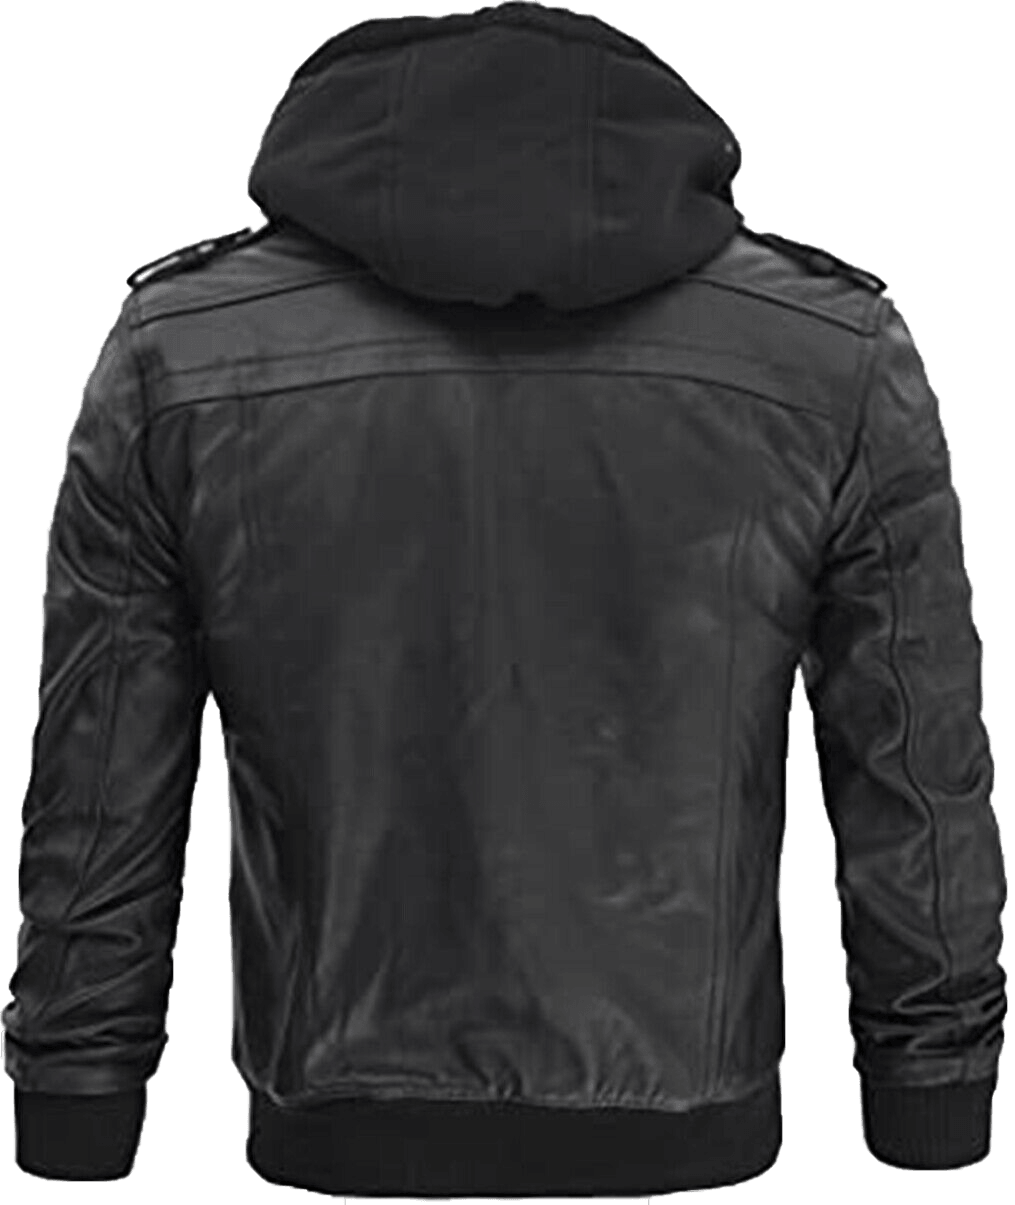 Men Black Leather Motorcycle Jacket with Removable Hood | Men Black Mo ...